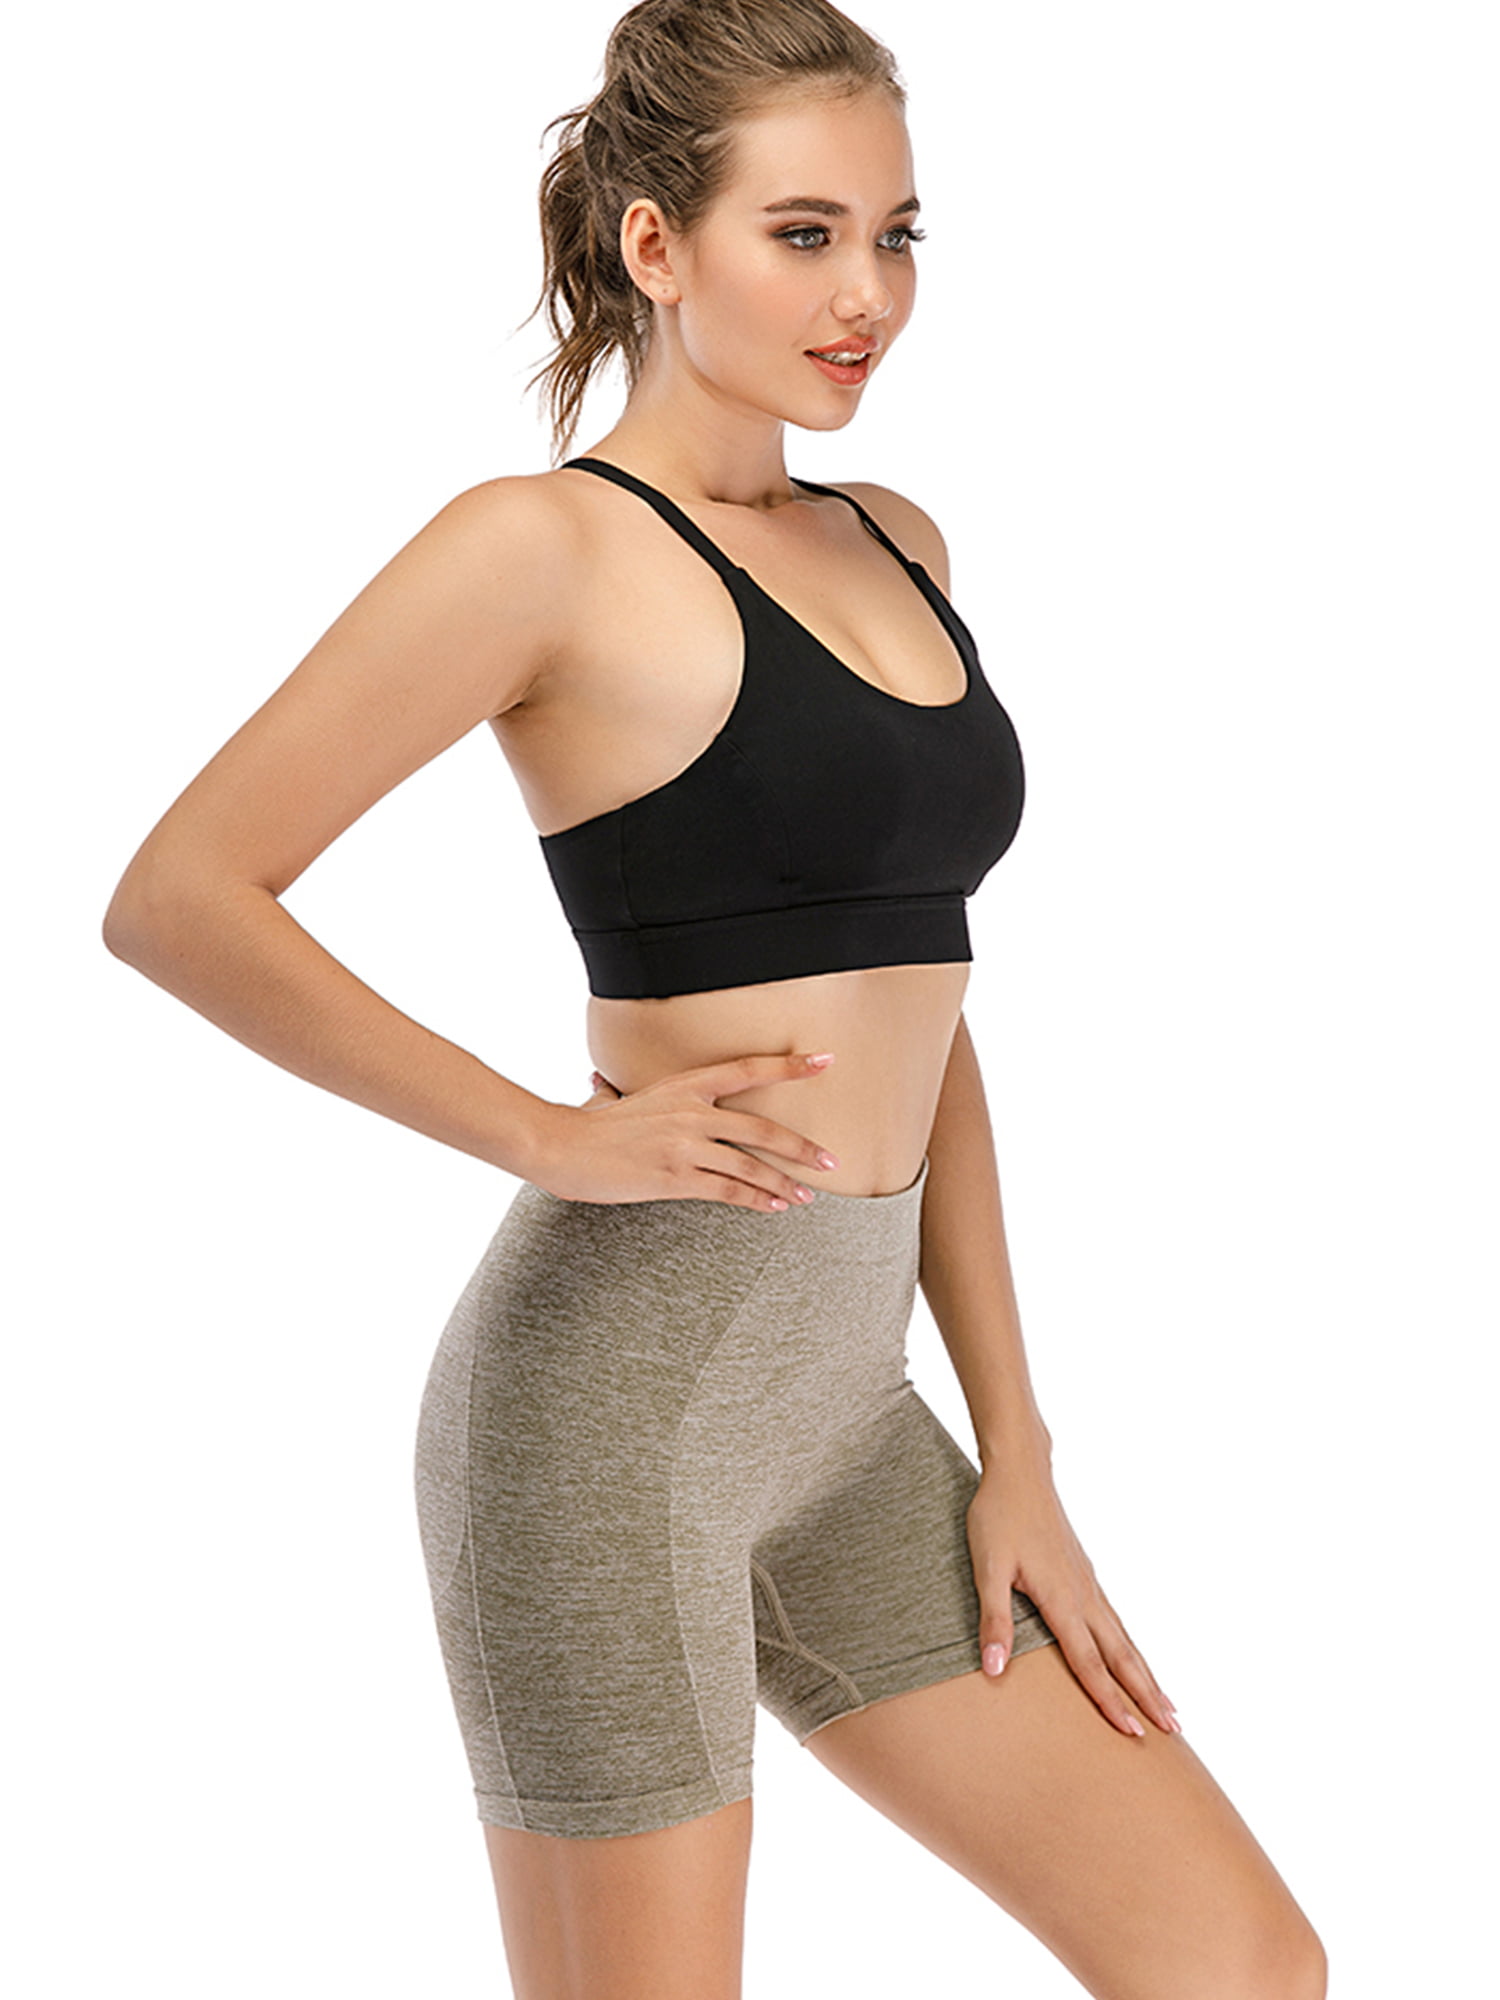 Dodoing - DODOING Tummy Control Workout Shorts for Women Biker Shorts